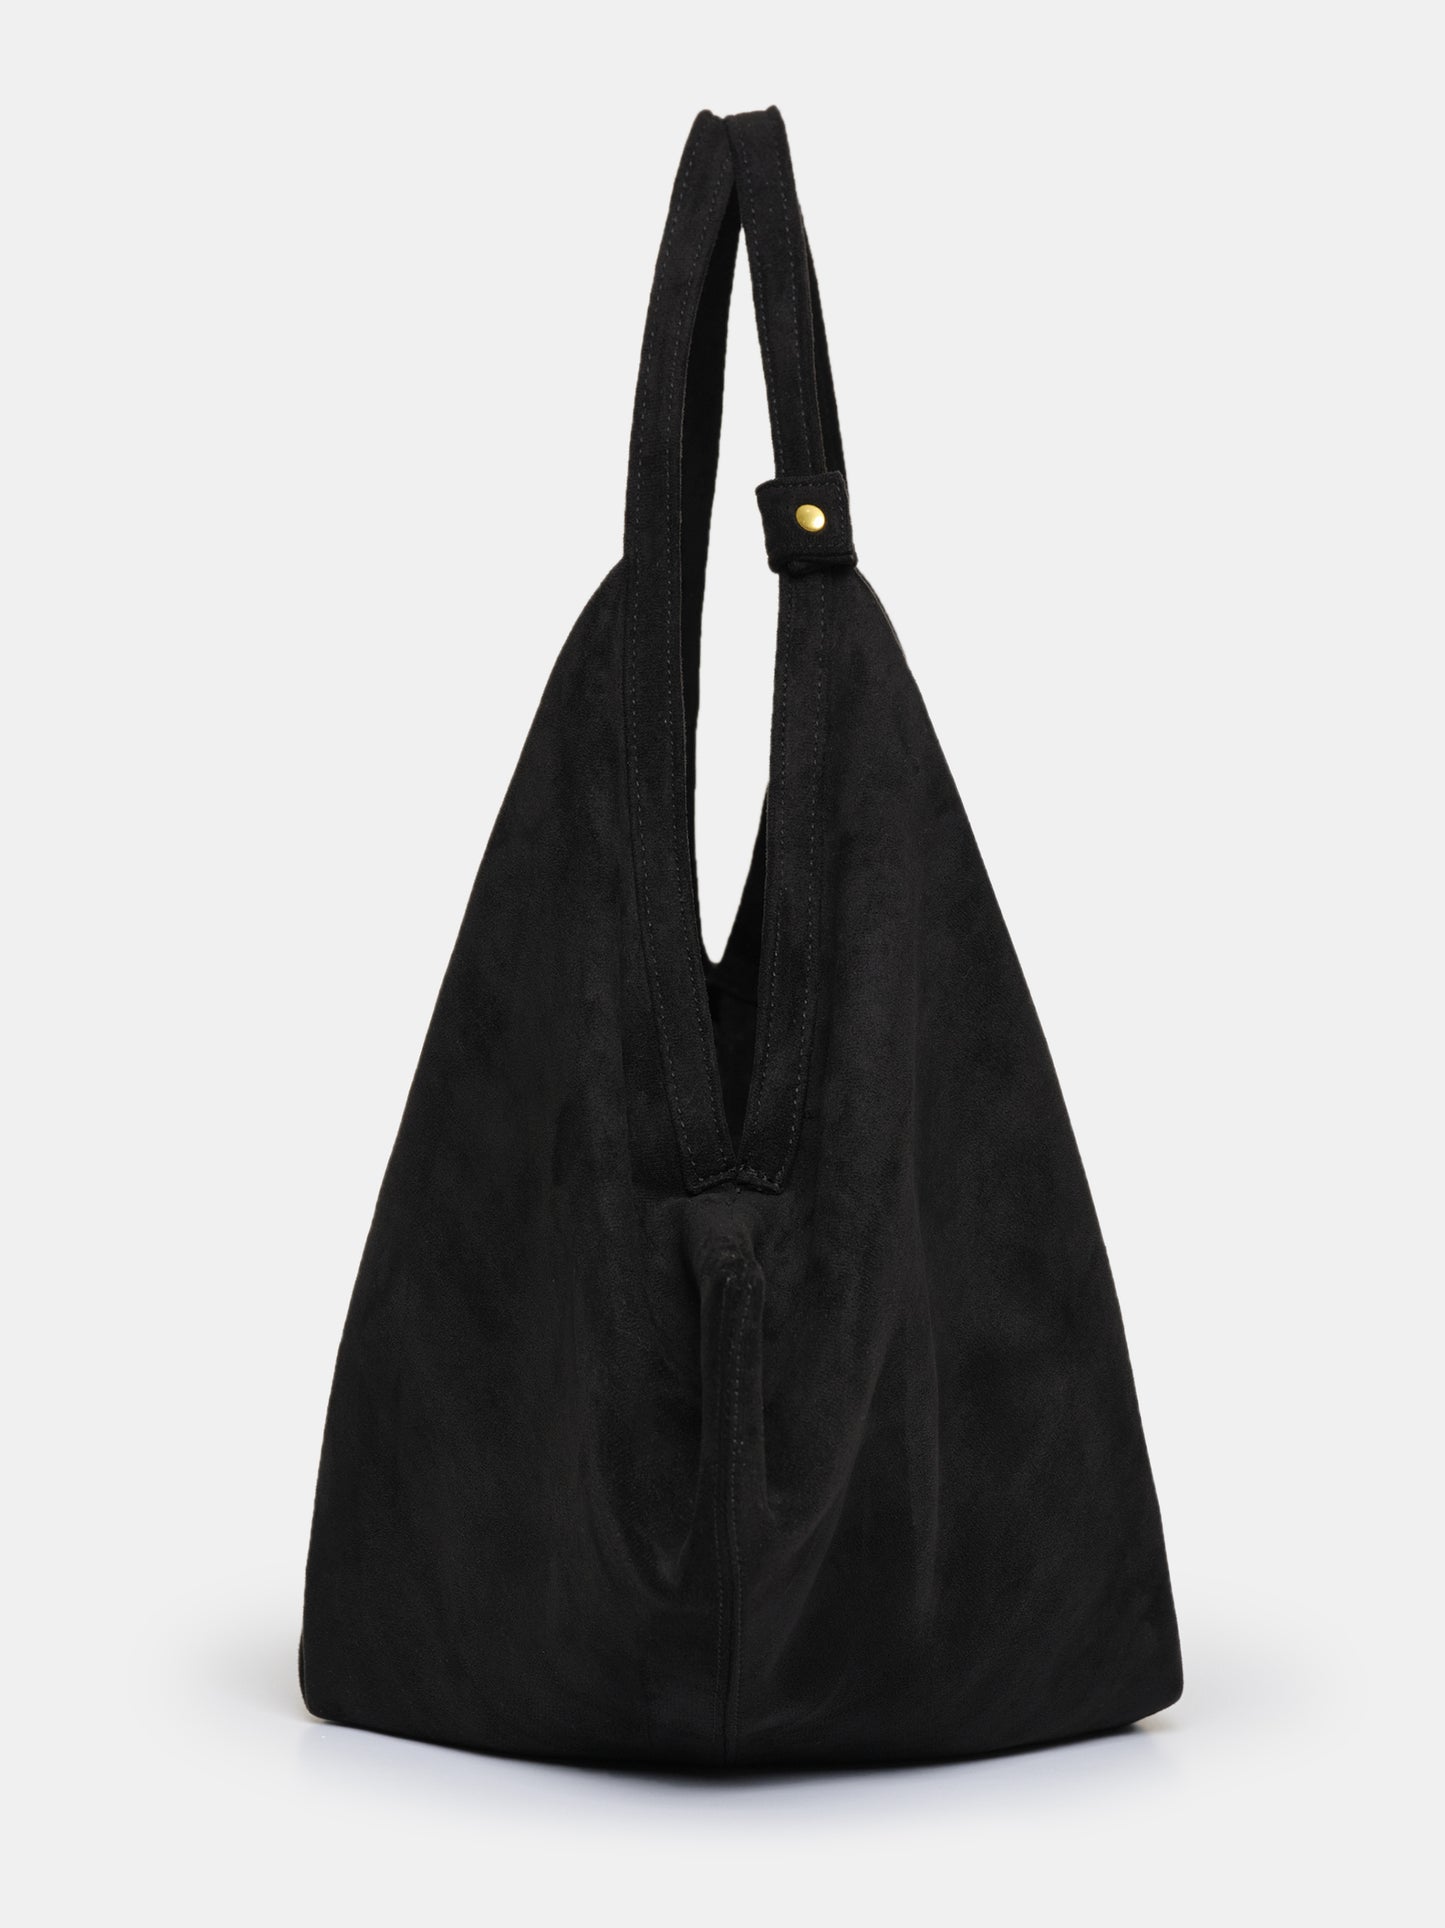 Large Fortune Cookie Bag, Suede Black